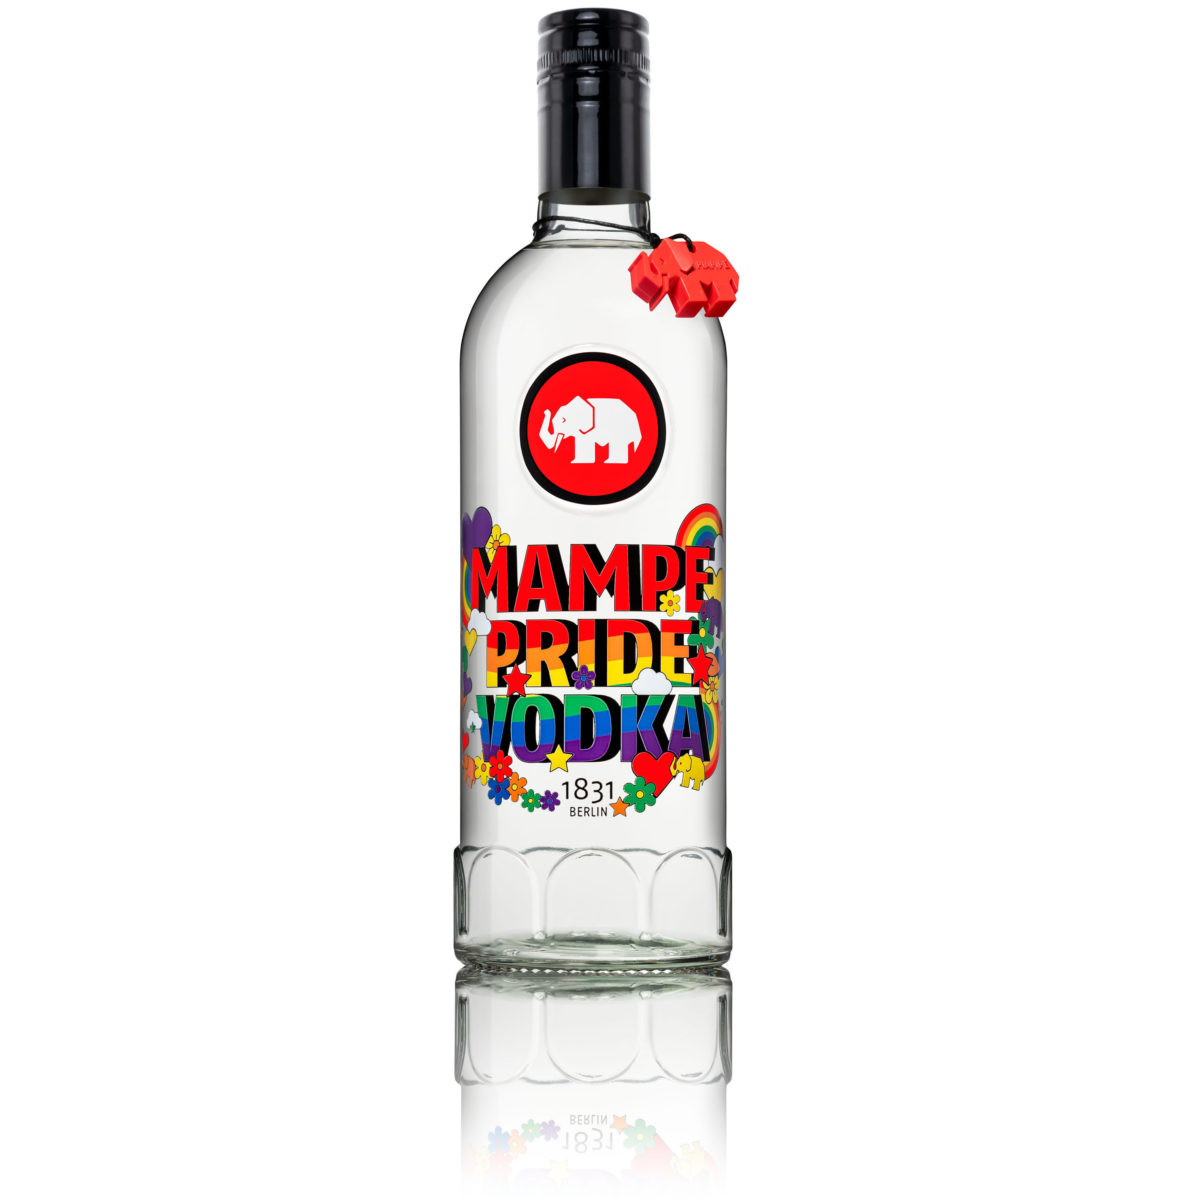 MAMPE, Bottle design